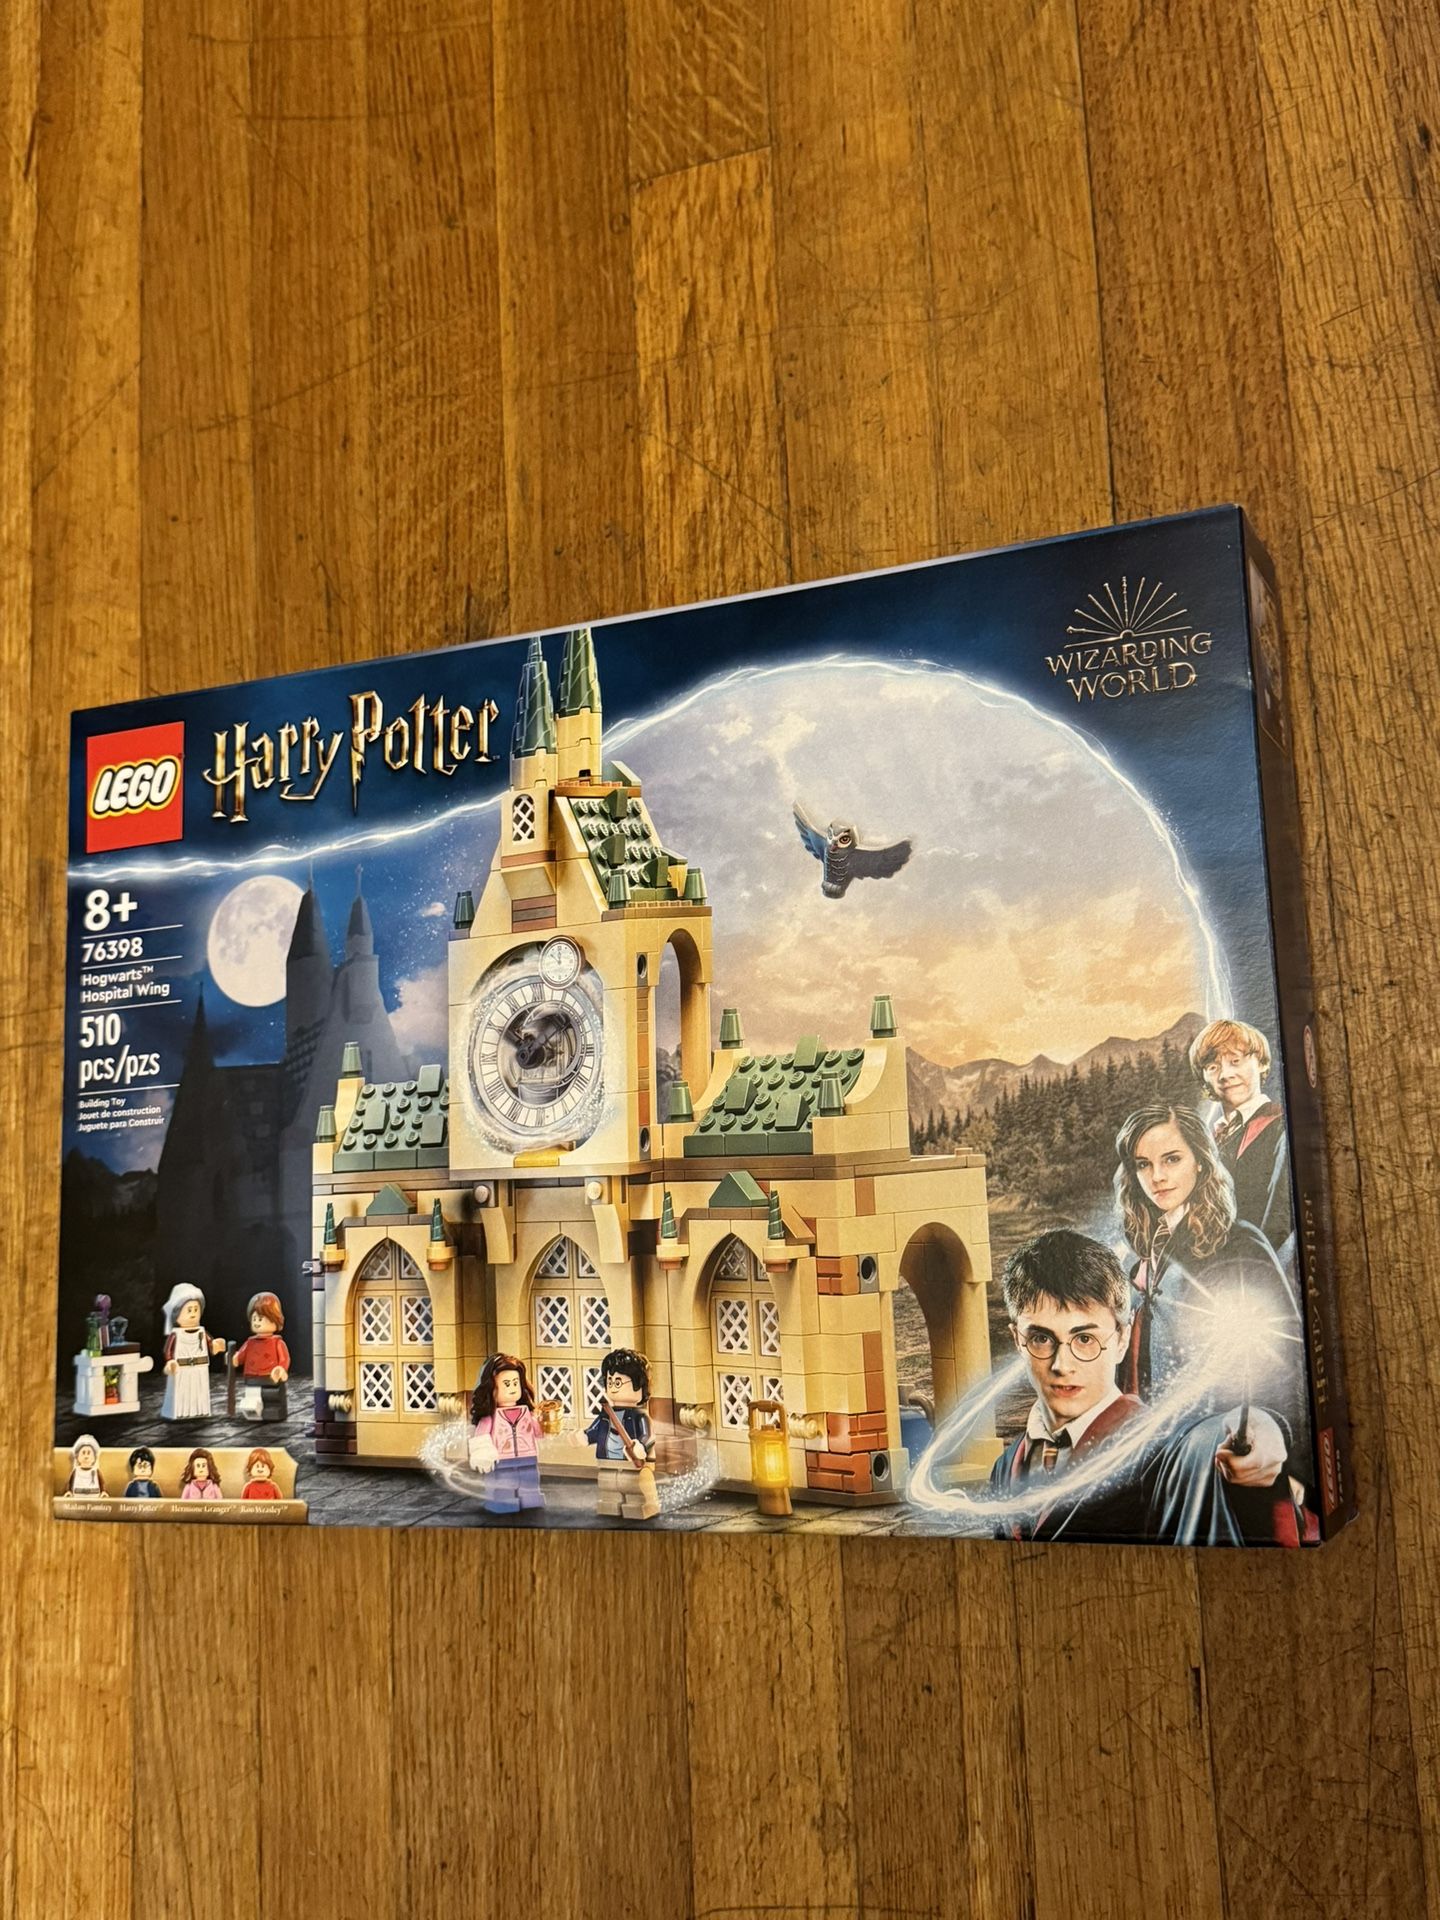 Lego Harry Potter Hogwarts Hospital Wing (76398) Brand new